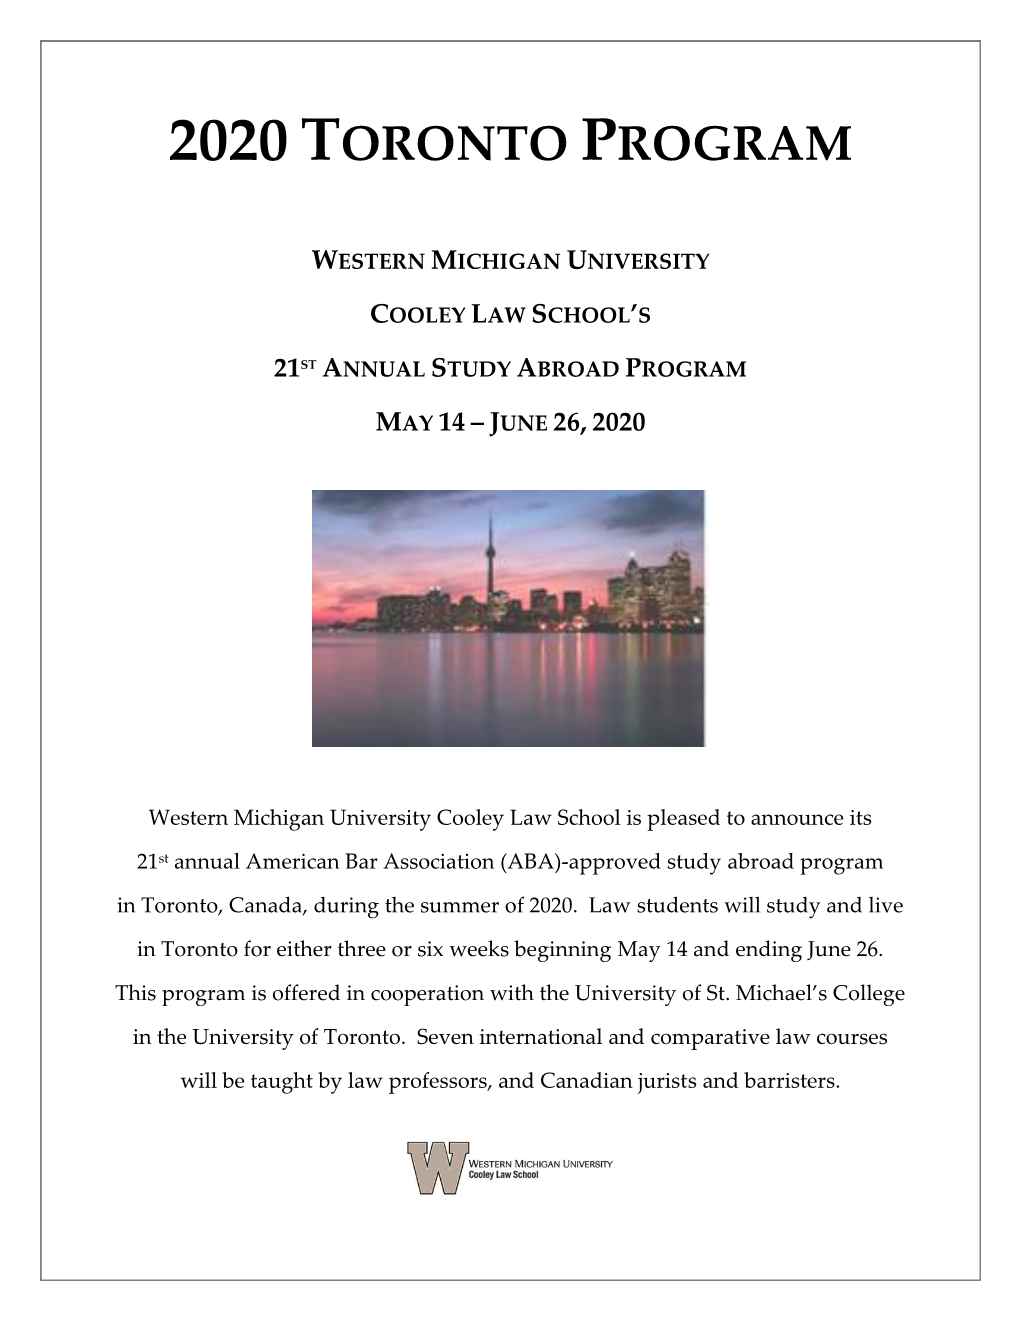 Download the 2020 Toronto Brochure Here